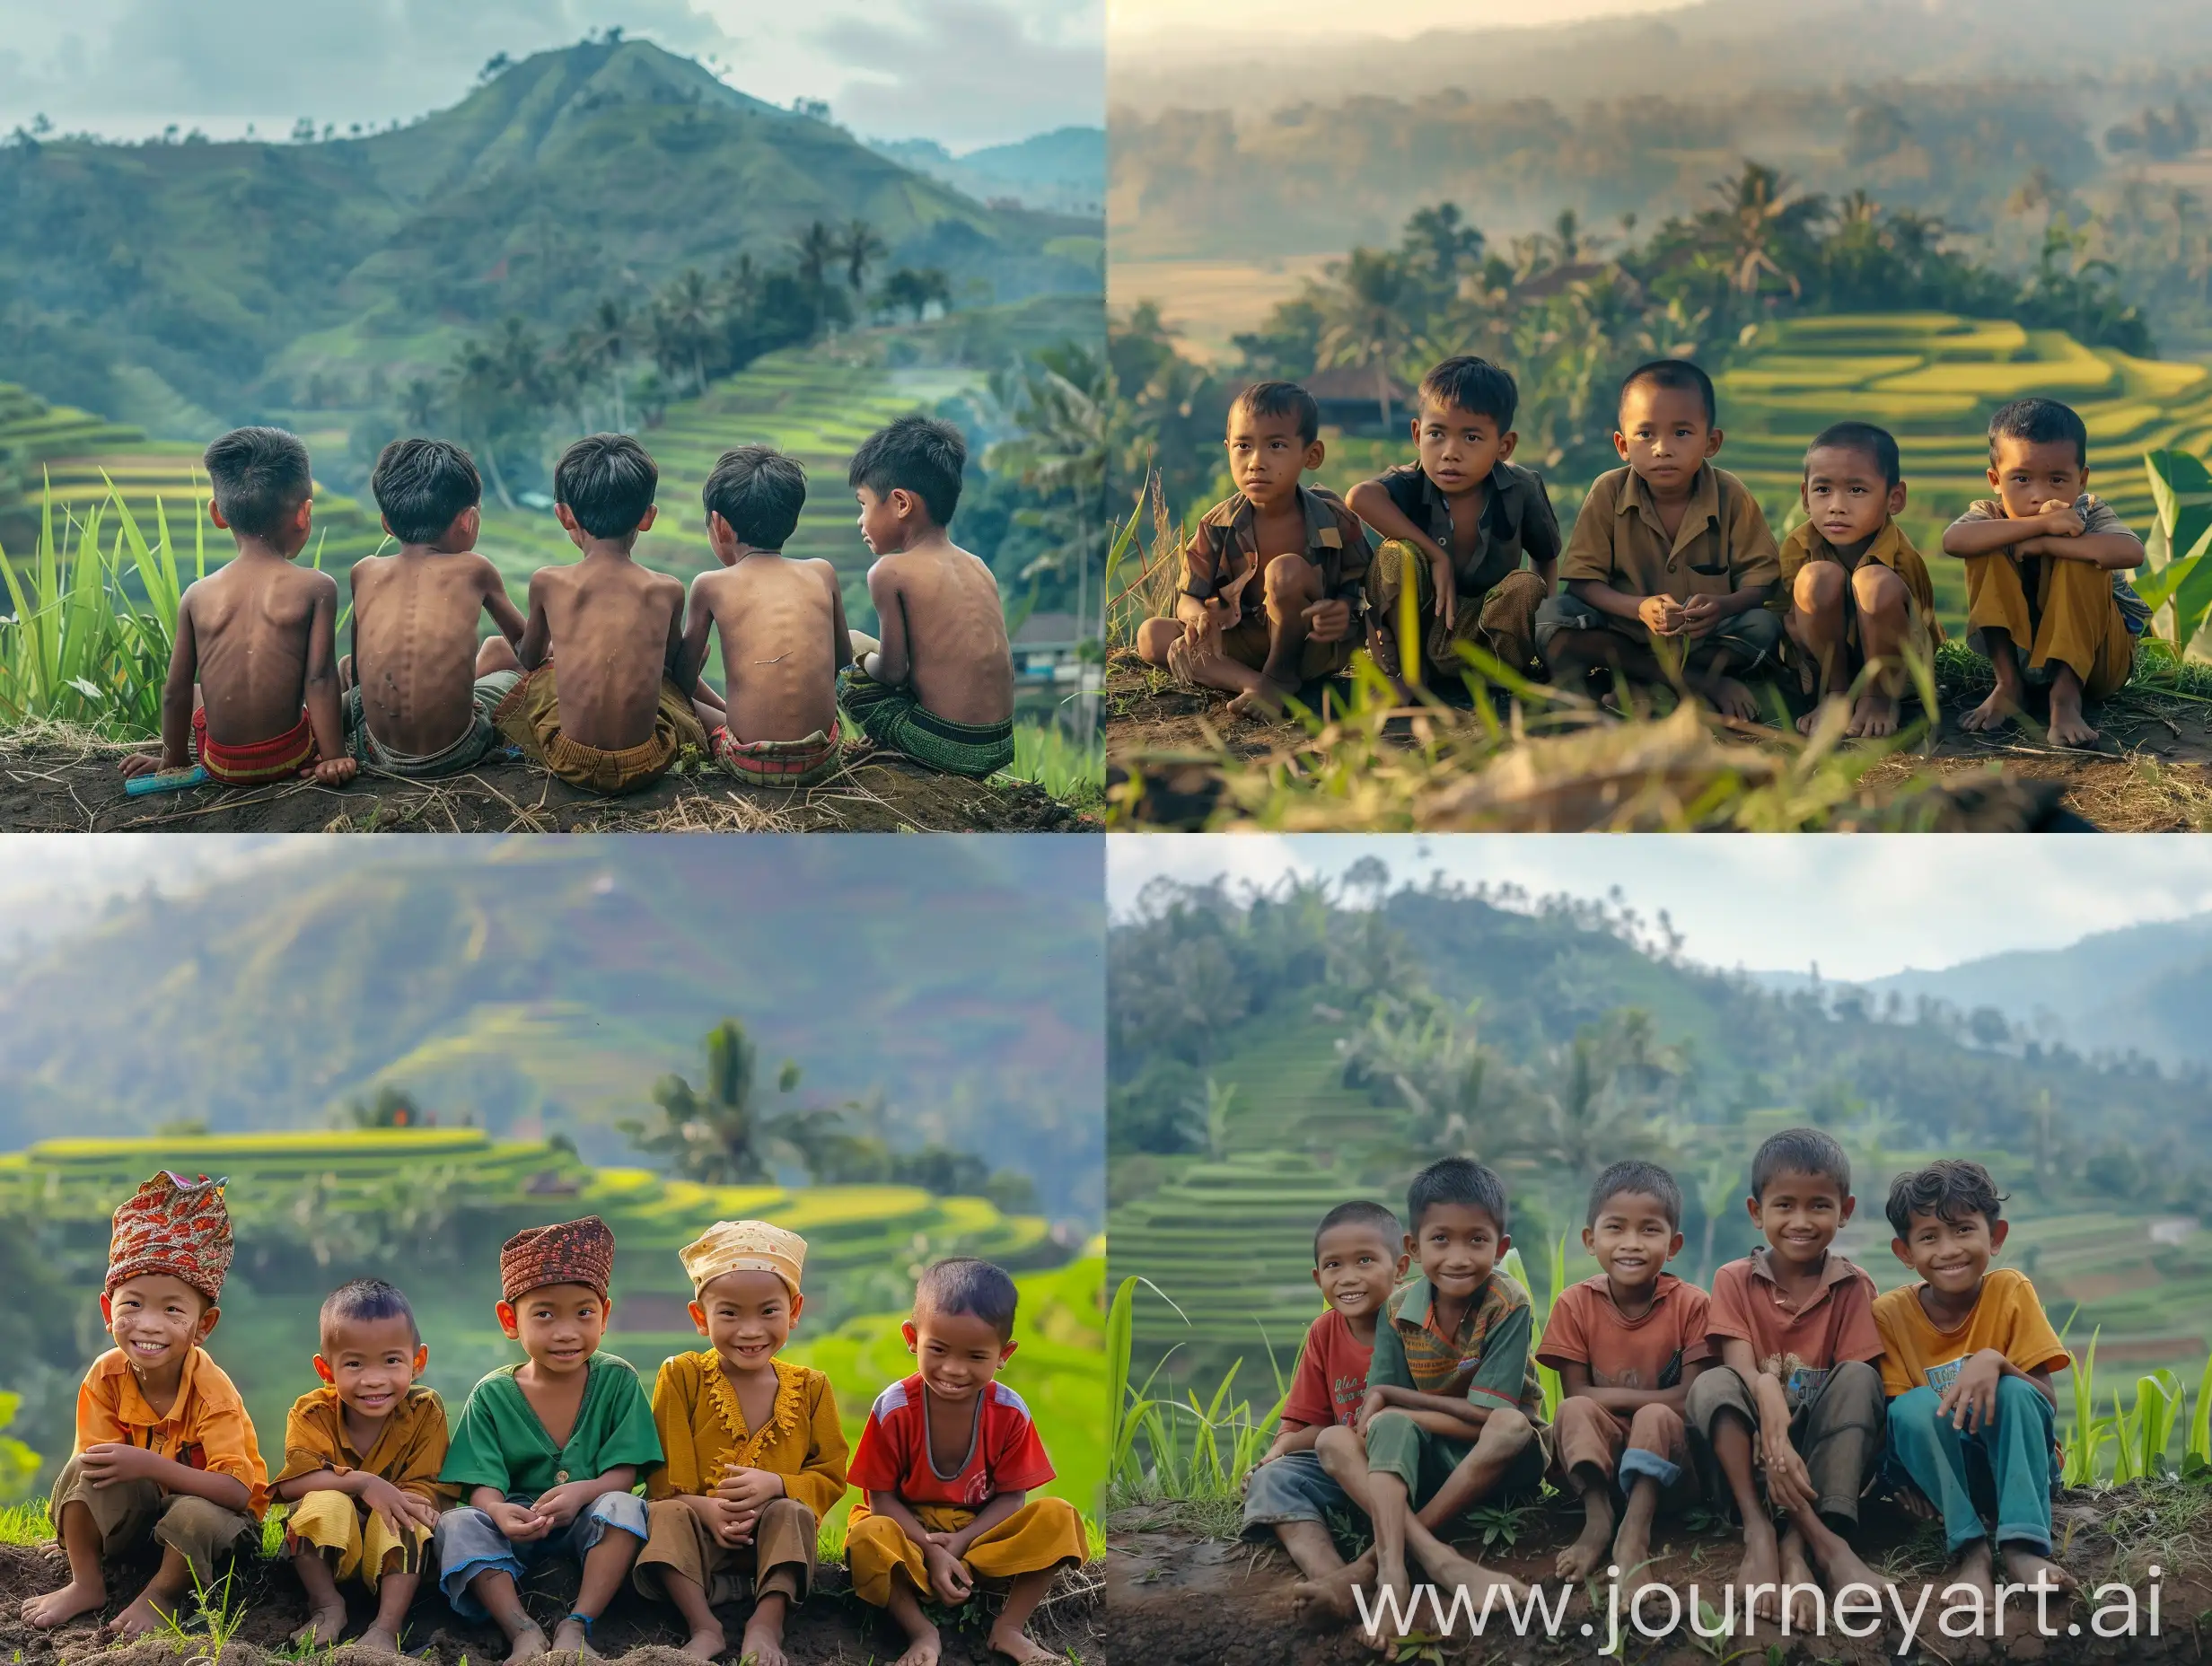 6 enam lelaki desa tamvan indonesia cilik berusia 7 tahun. Mereka berenam sedang duduk rapih diatas bukit.Dibelakangnya ada sawah dan gunung bukit indah. Leica kamera. 8K HD. sangat detail.